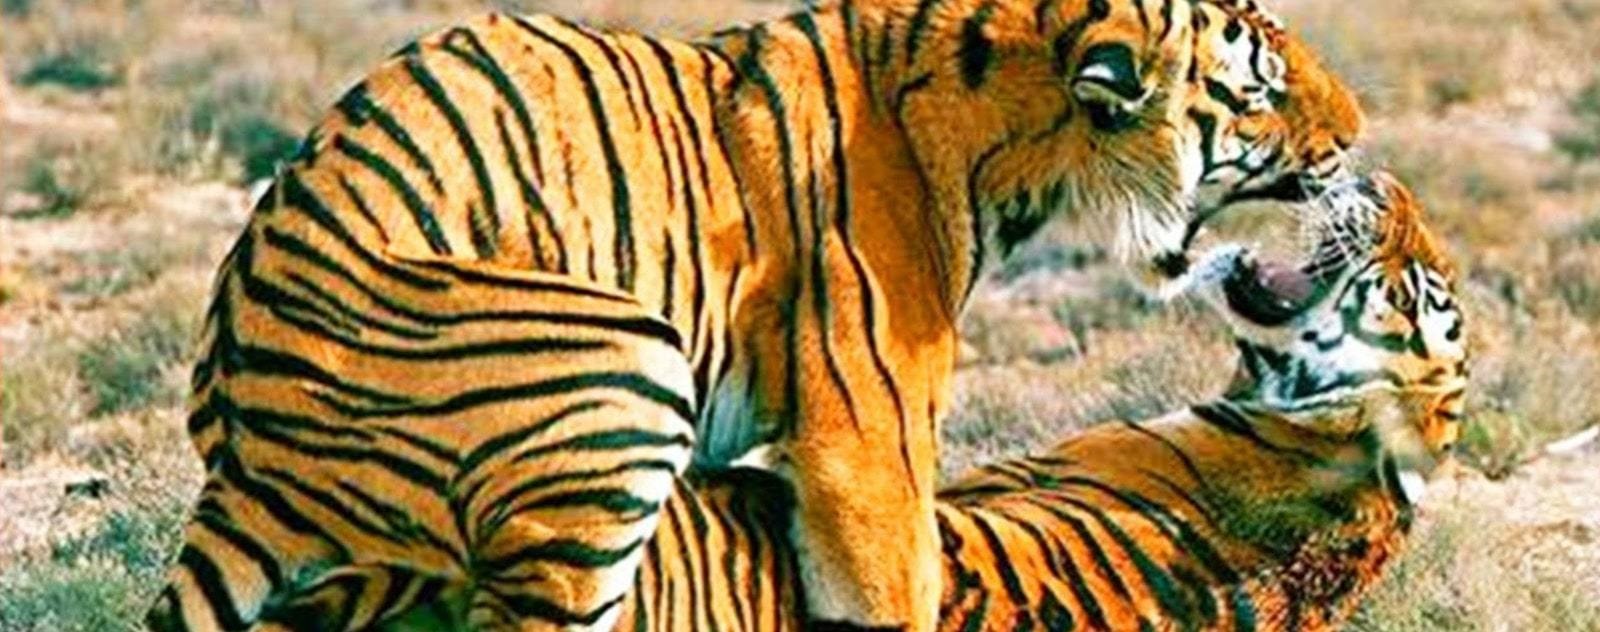 reproduction du tigre